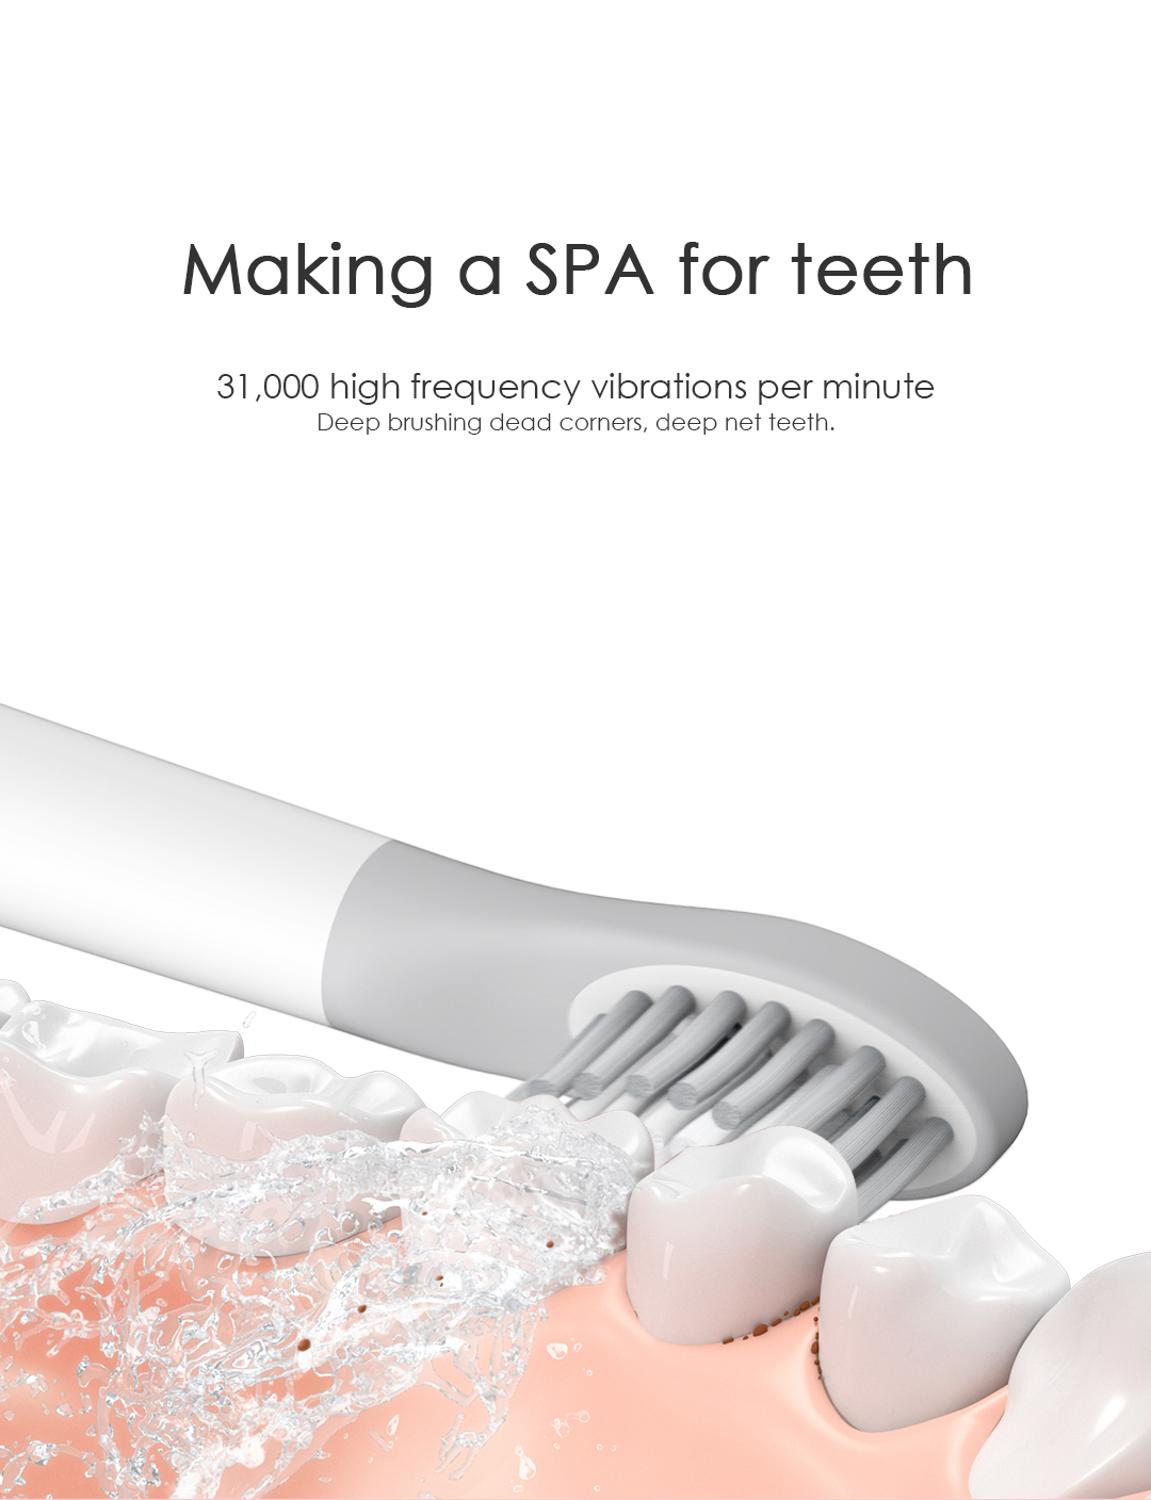 Originale pinjing  ex3 so hvide tandbørstehoveder xiaomi youpin soocas elektriske soniske ultralyds-tandbørstehoveder